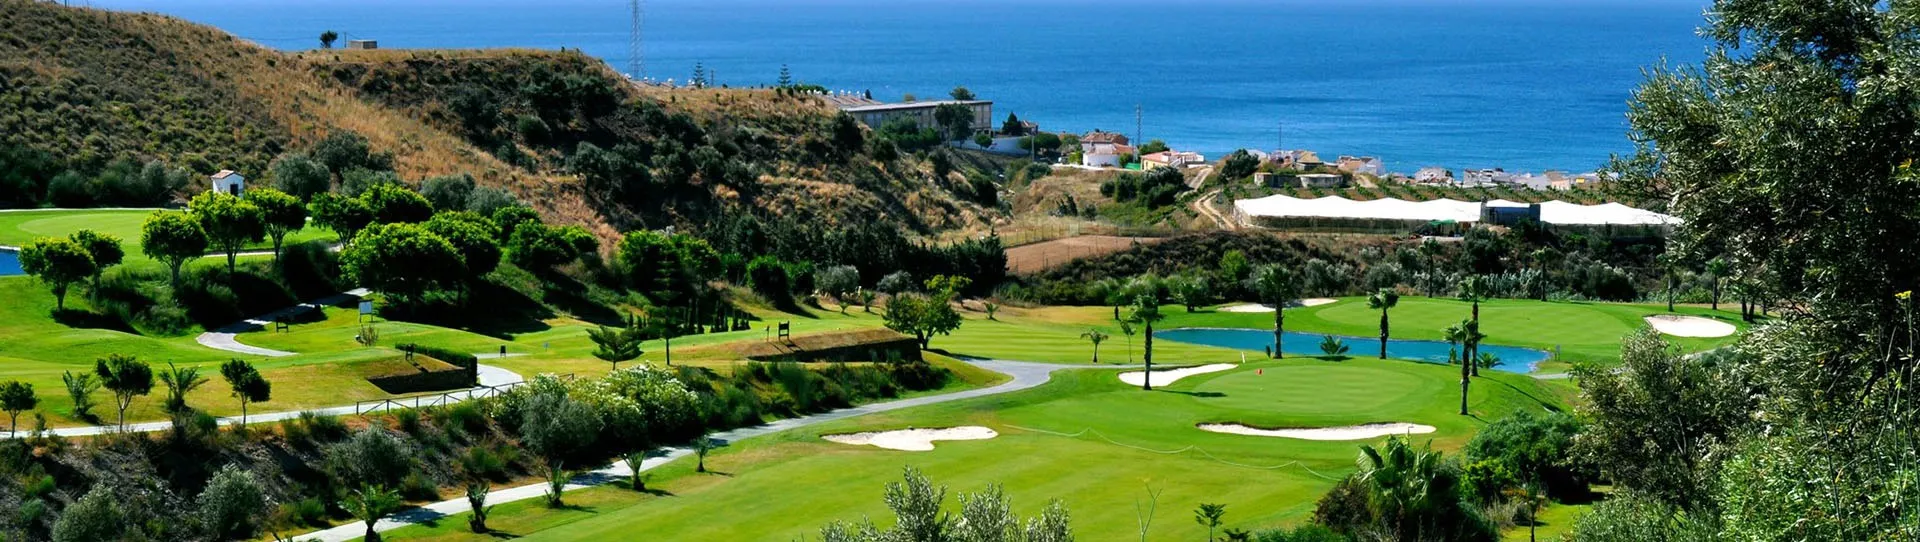 Spain golf holidays - Malaga  Il Trio - Photo 1